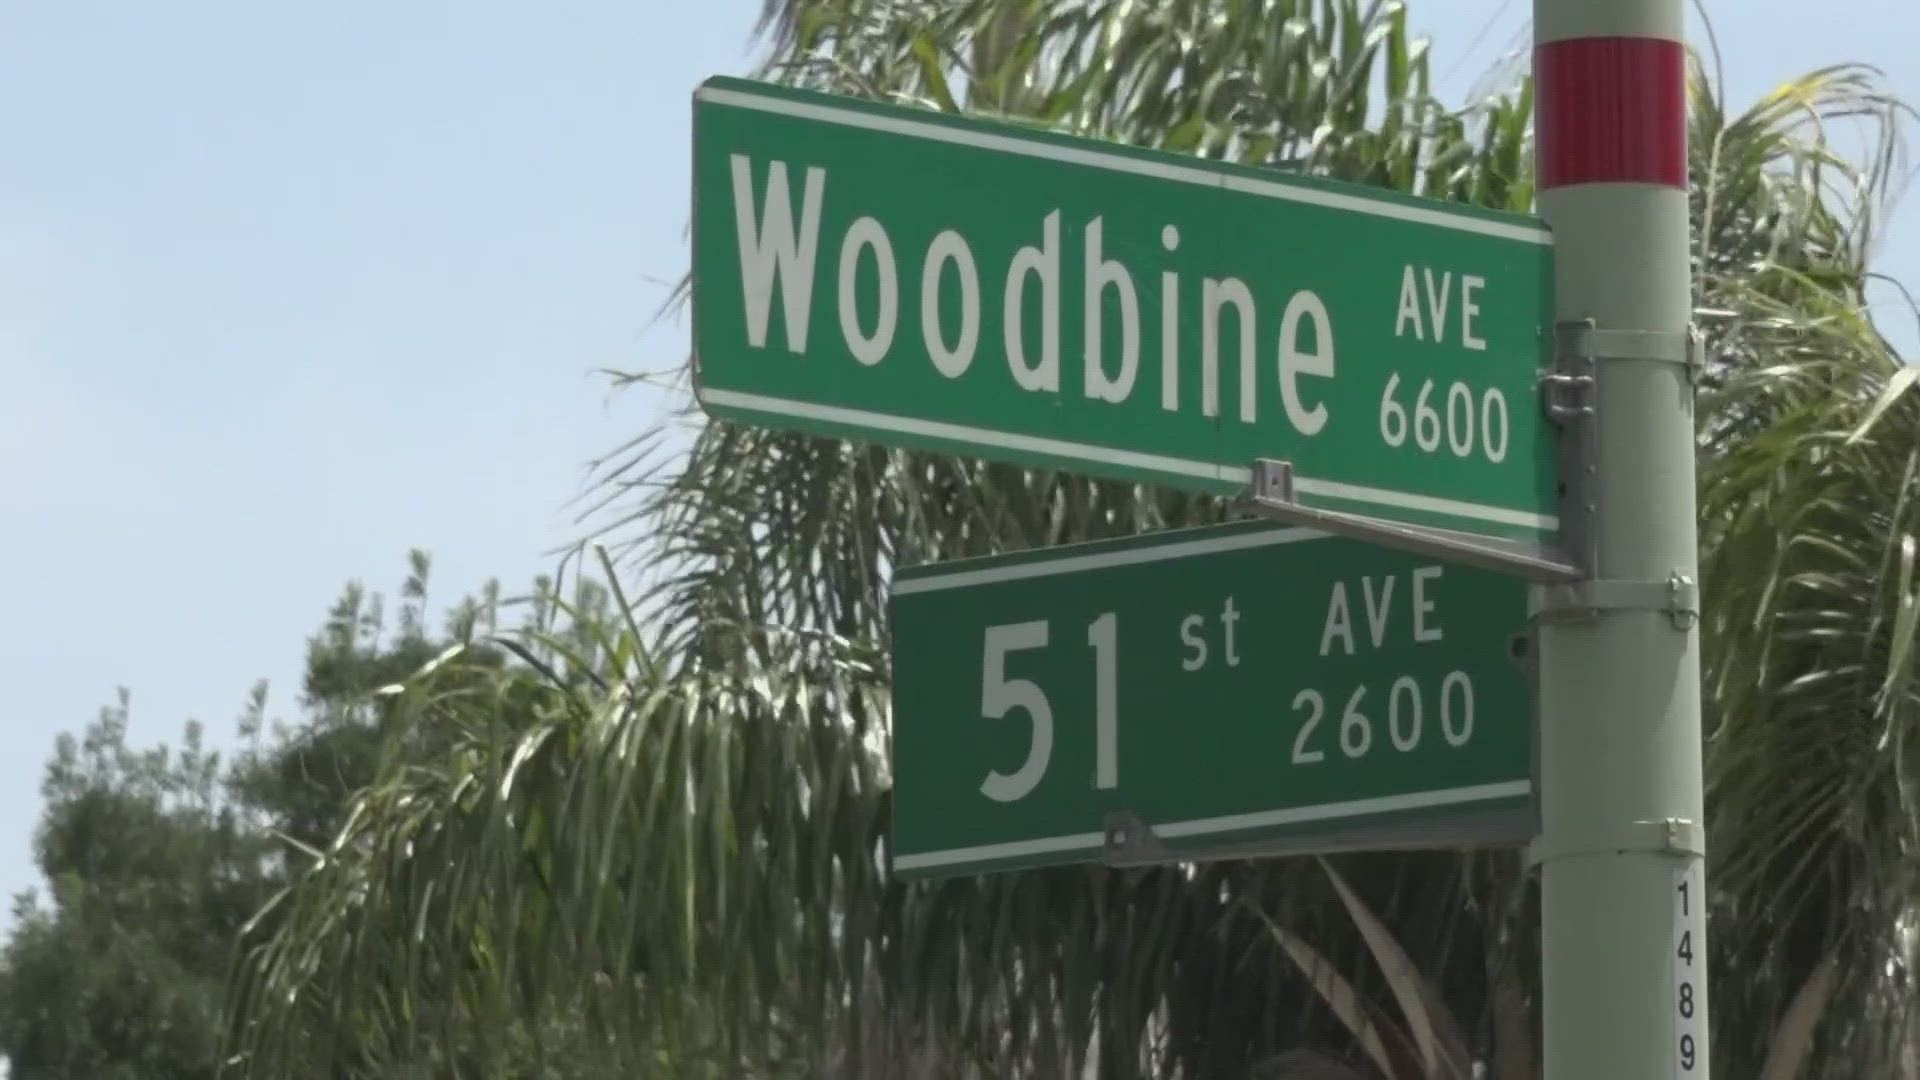 The death happened in the 2500 block of 51st Avenue in Sacramento's Woodbine neighborhood.